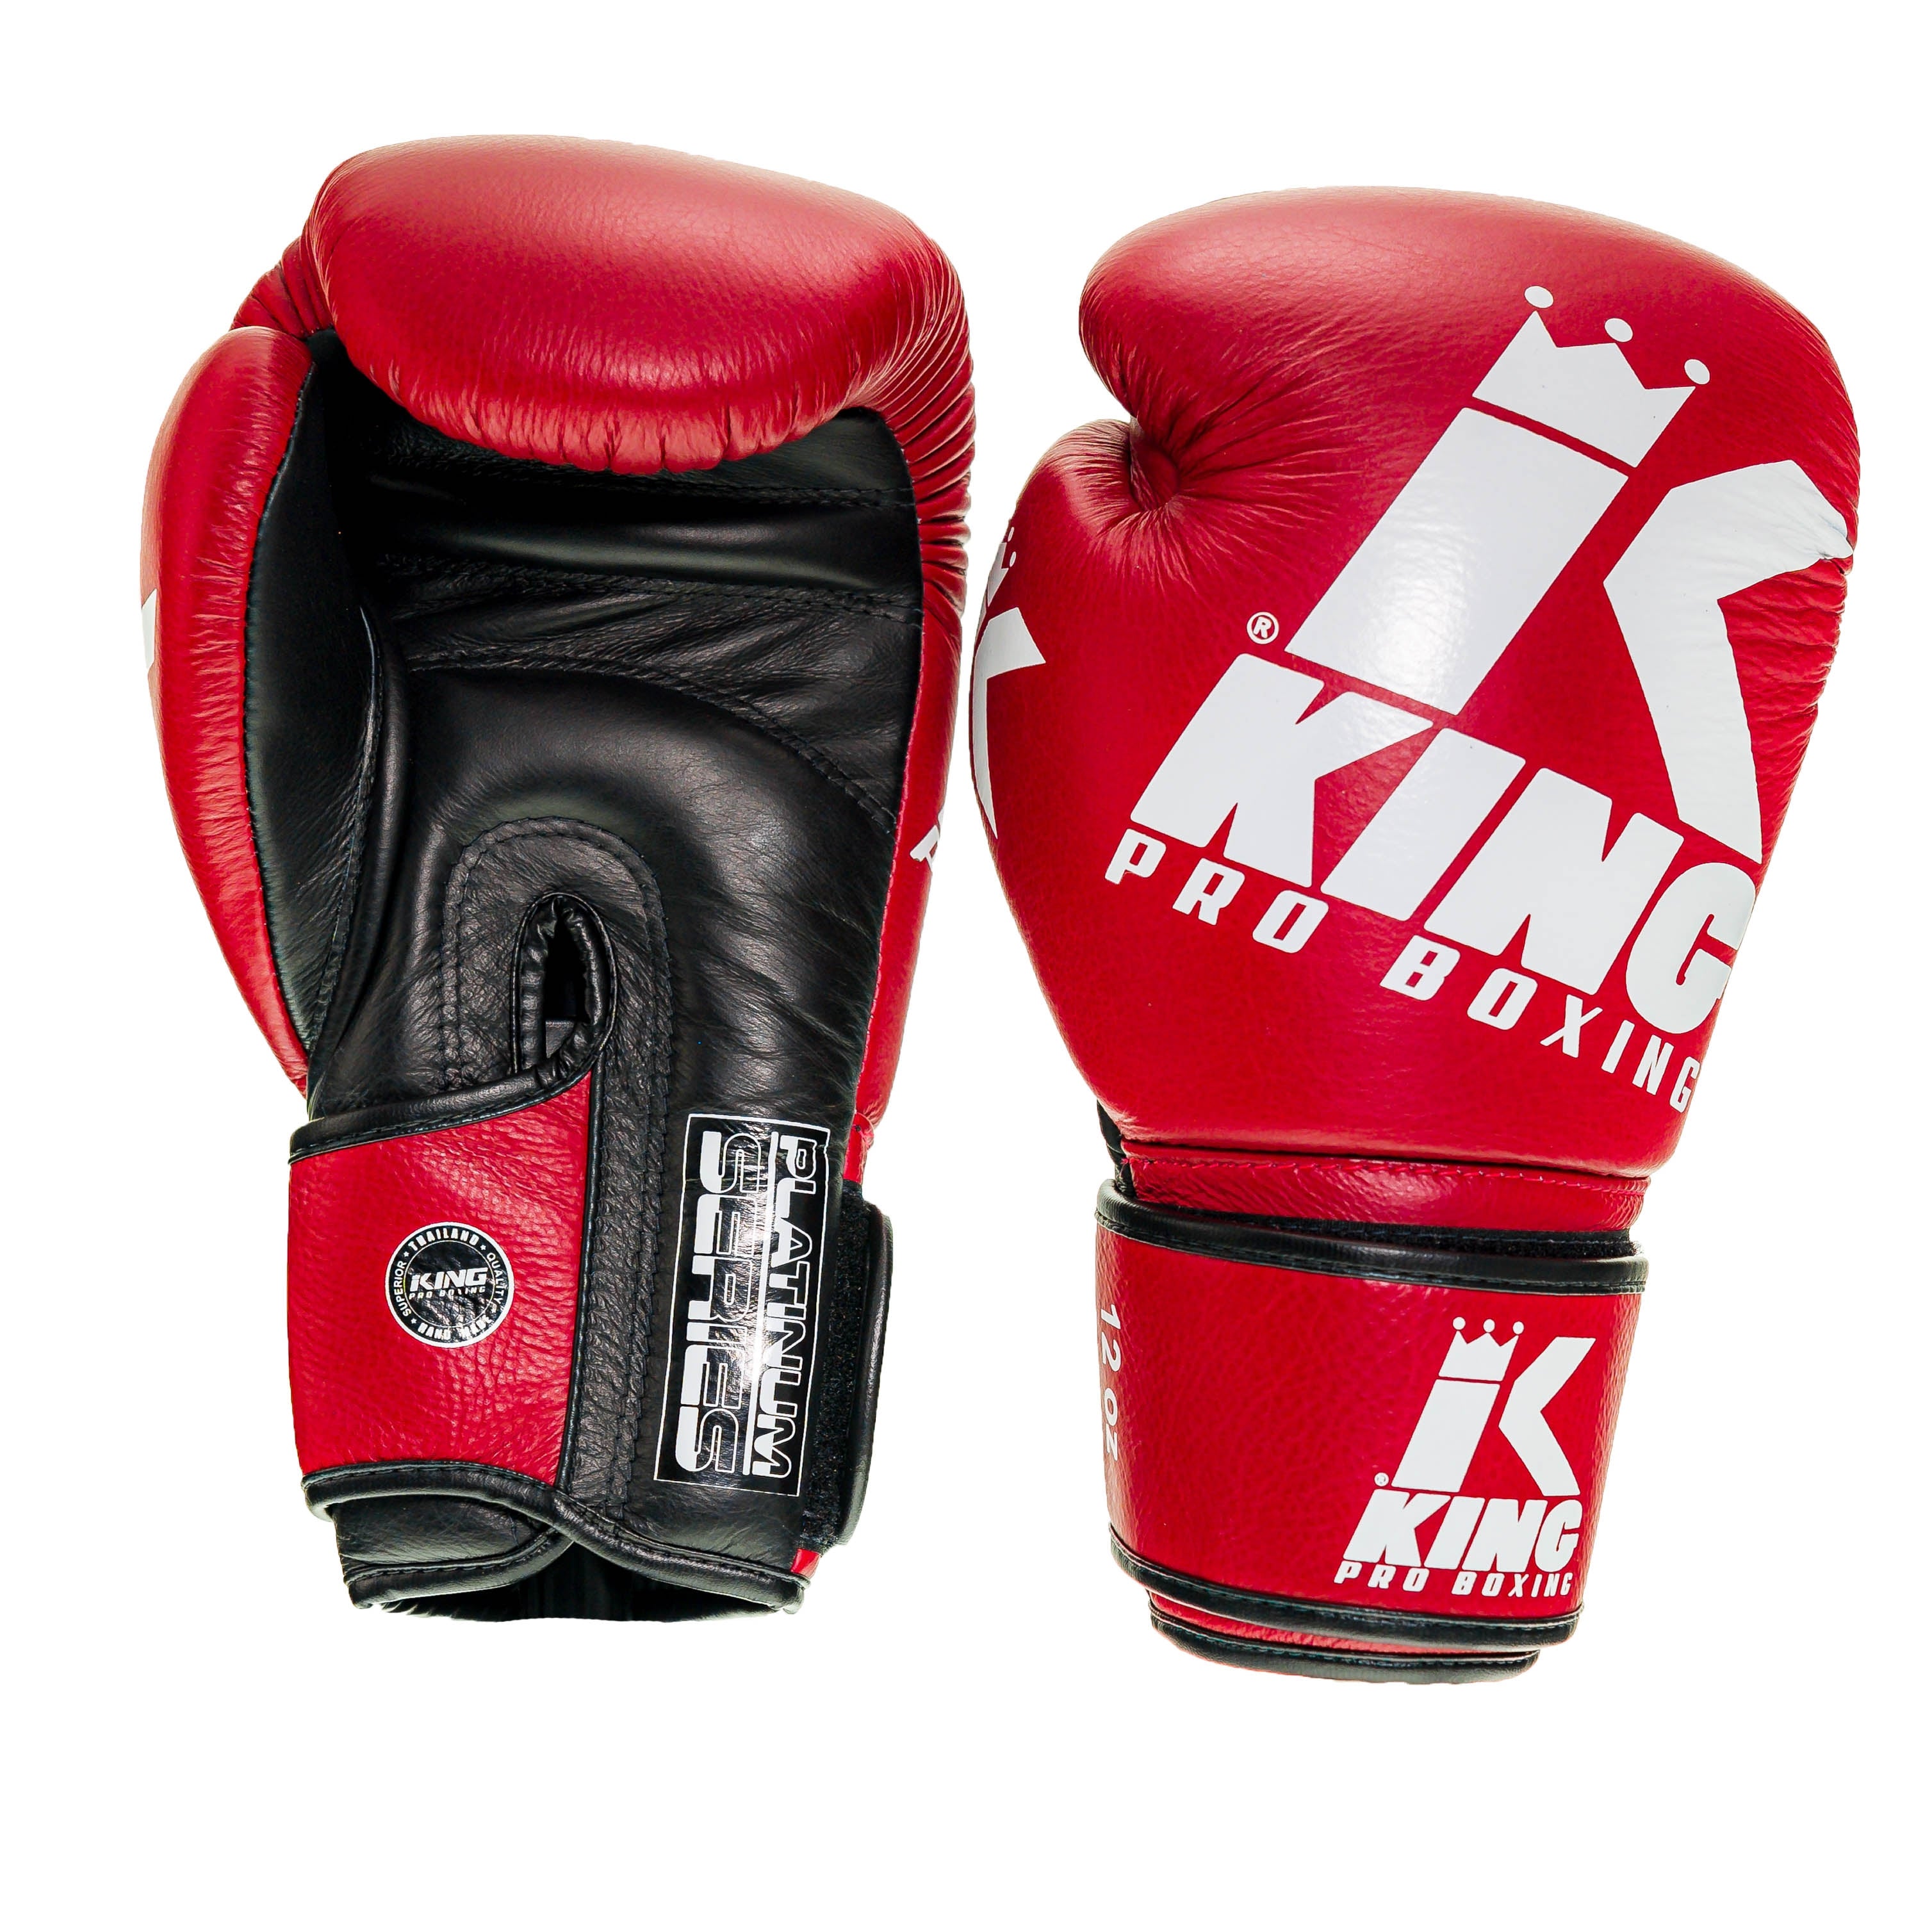 King PRO boxing boxing gloves - BG PLATINUM 4